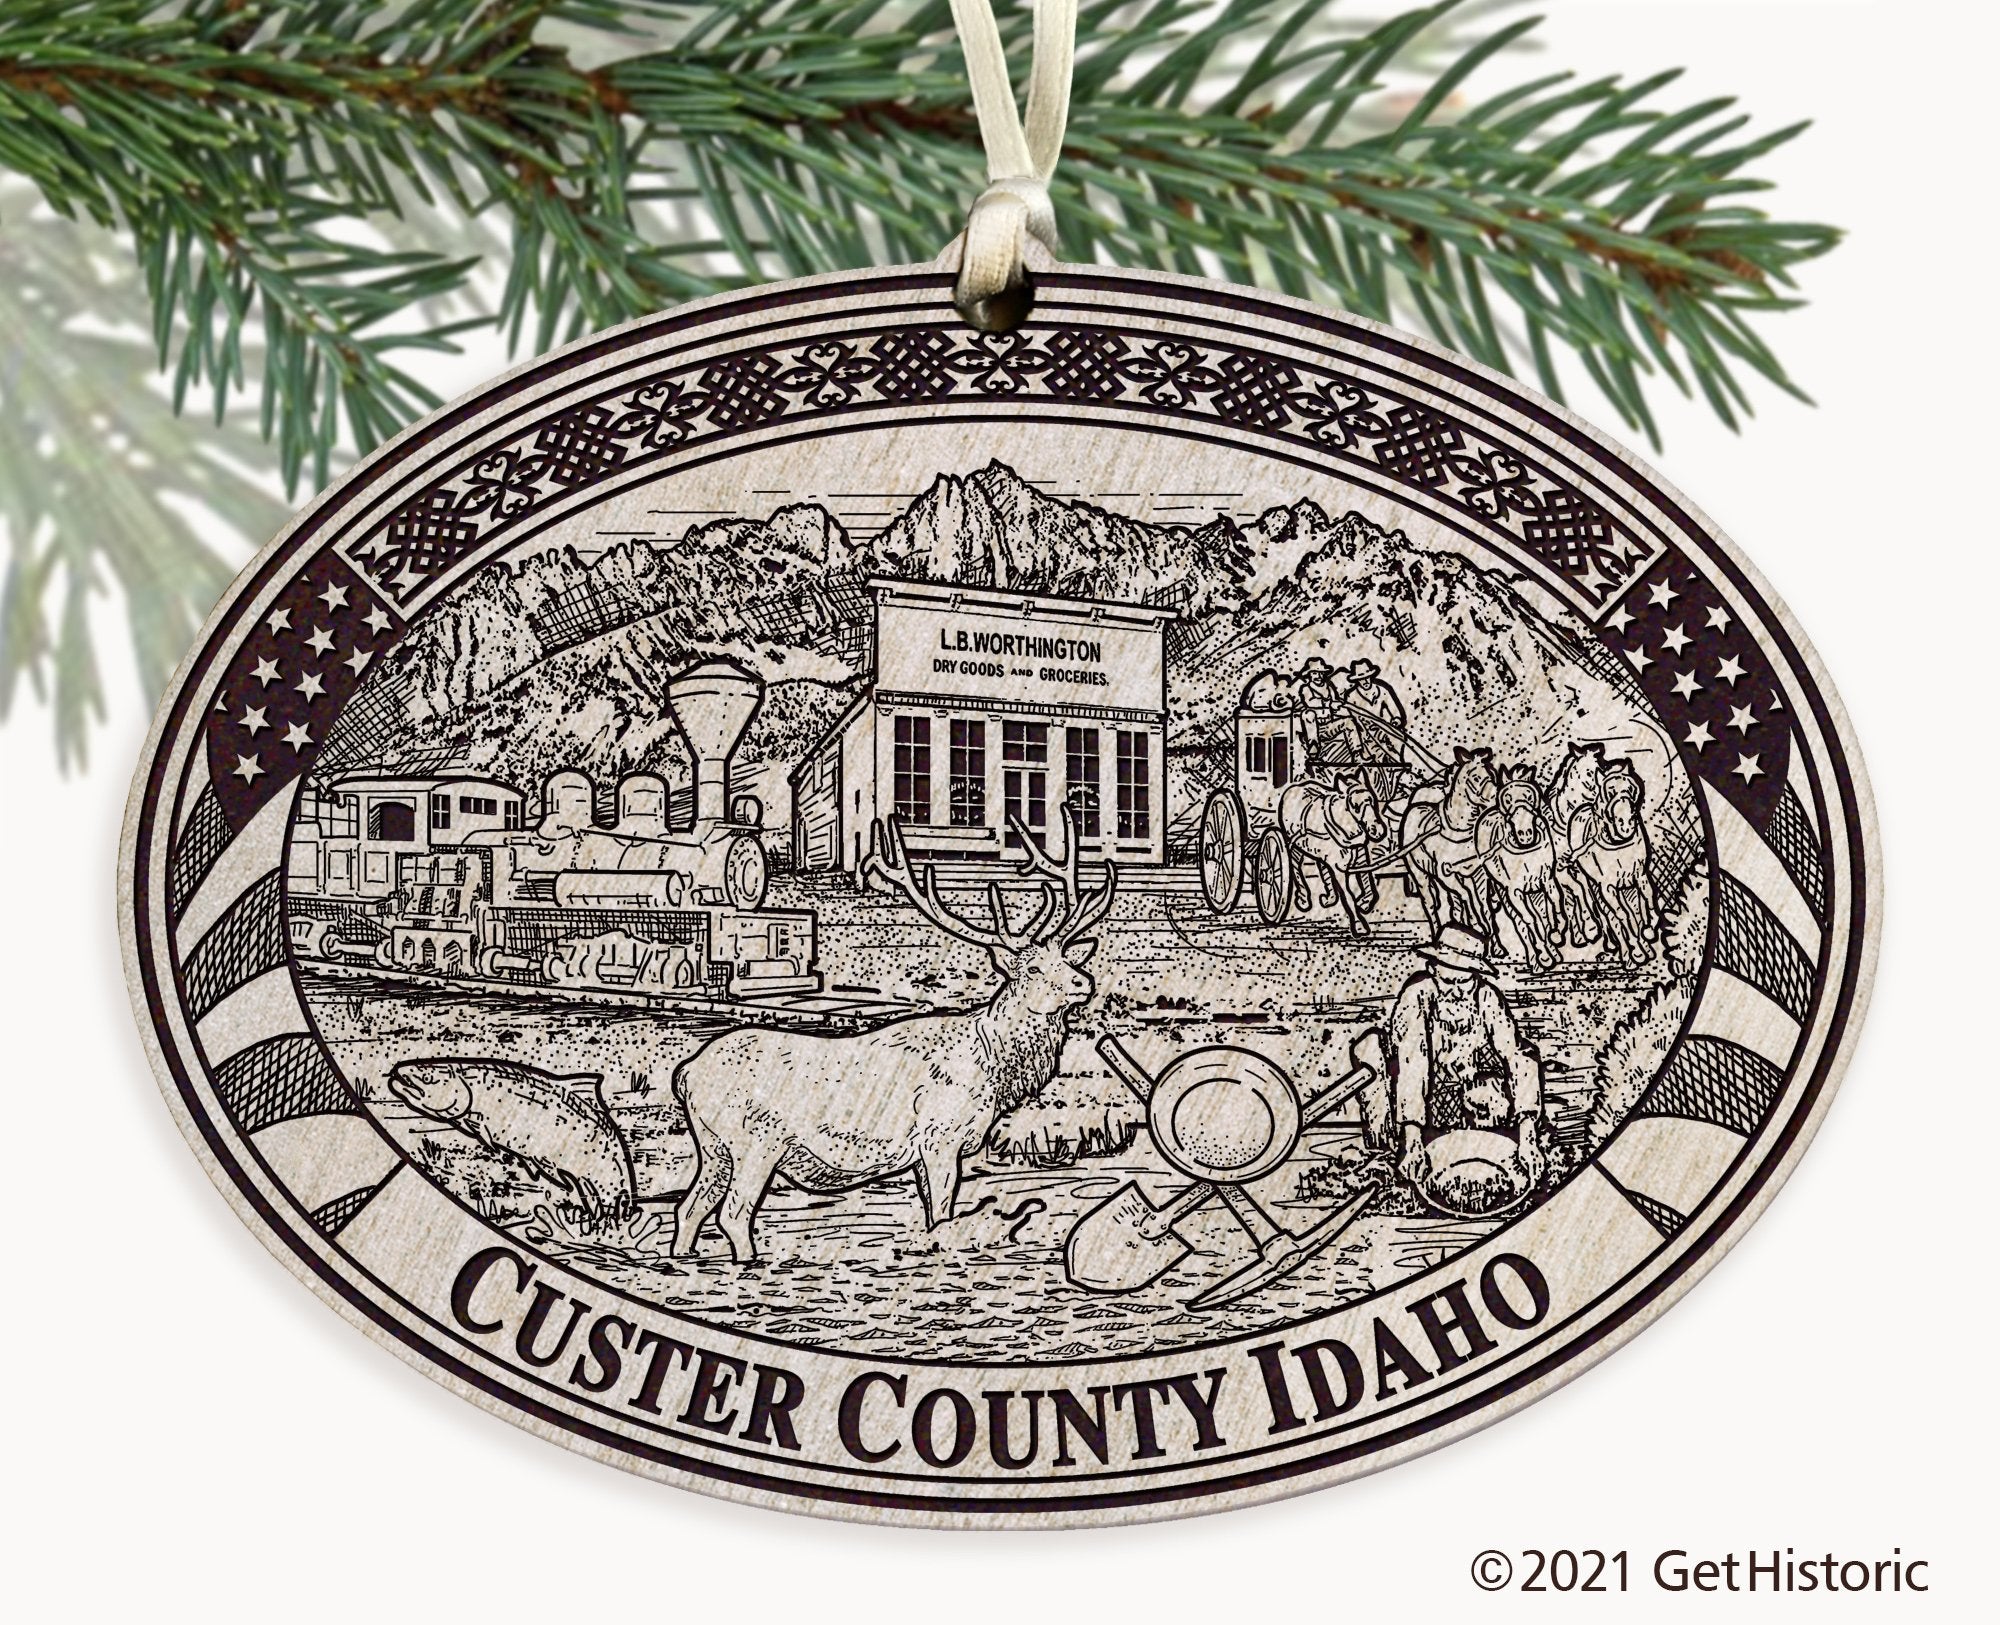 Custer County Idaho Engraved Ornament